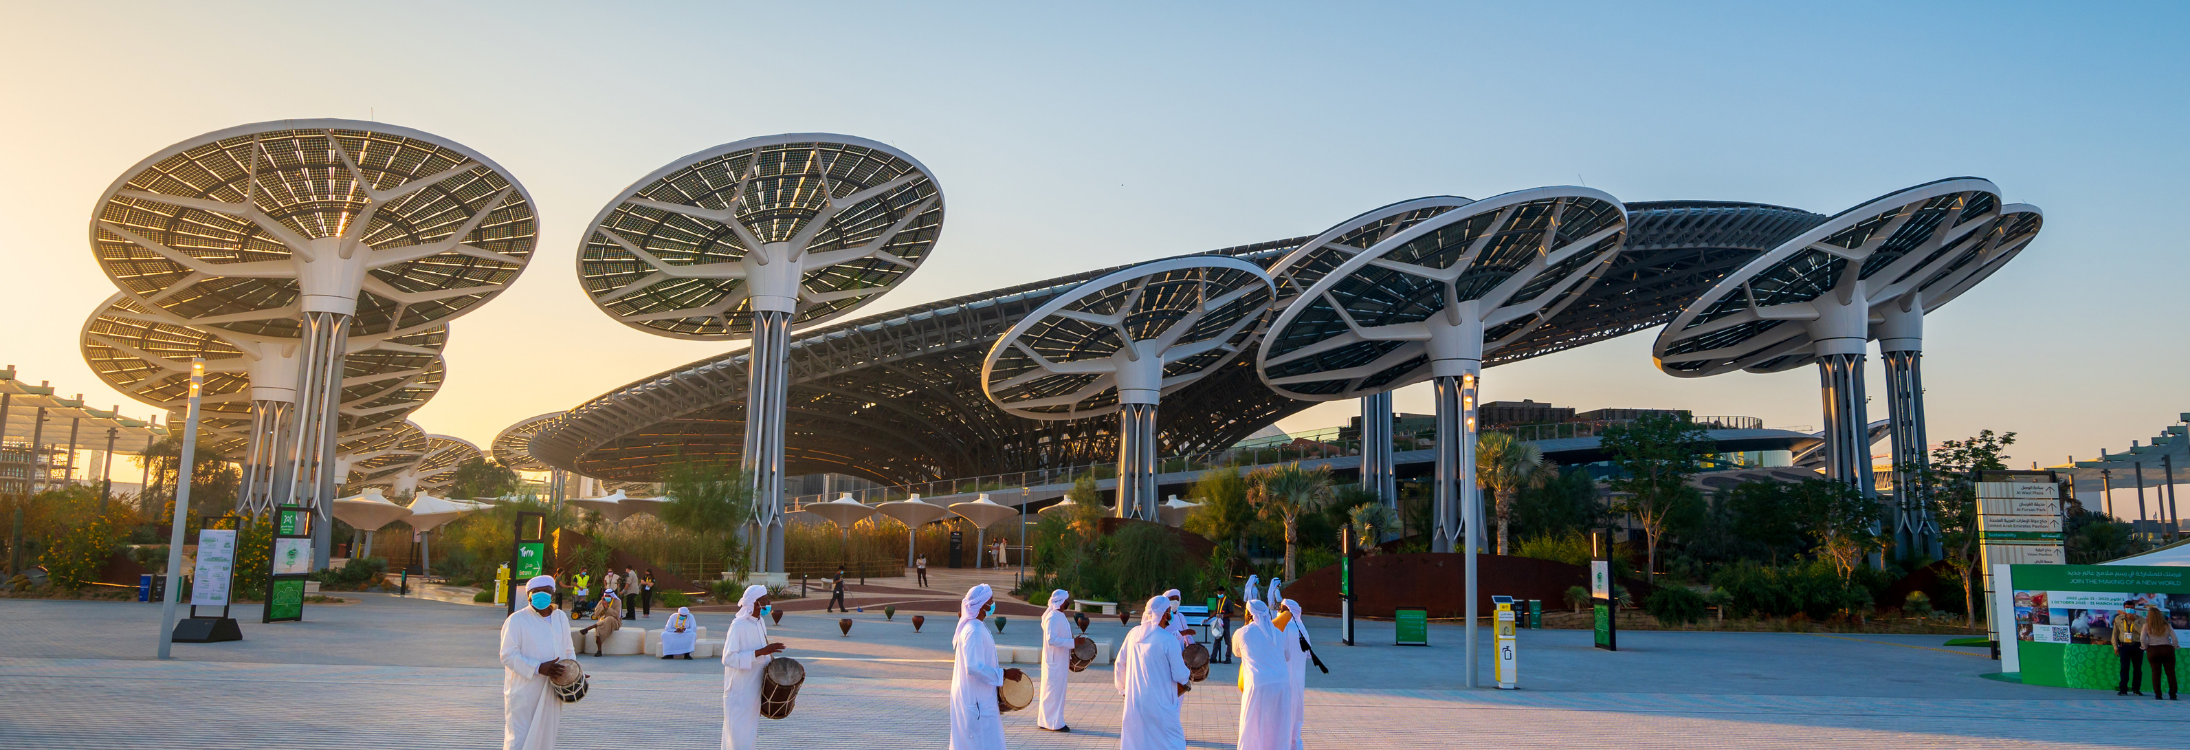 COVID-19 safety measure at Dubai Expo 2020